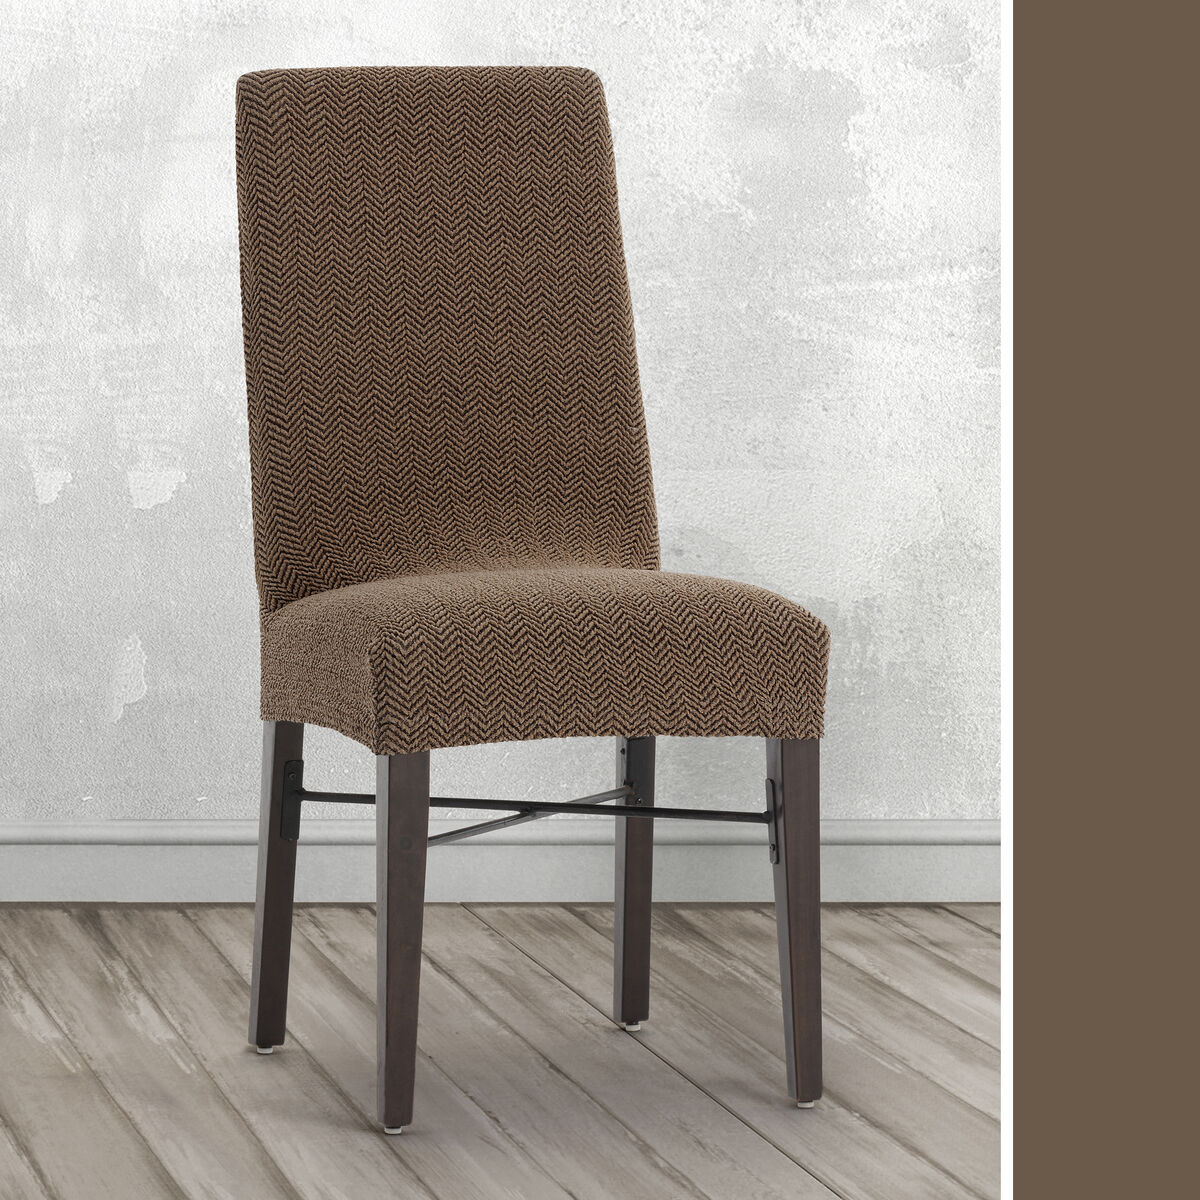 Chair Cover Eysa JAZ Brown 50 x 60 x 50 cm 2 Units